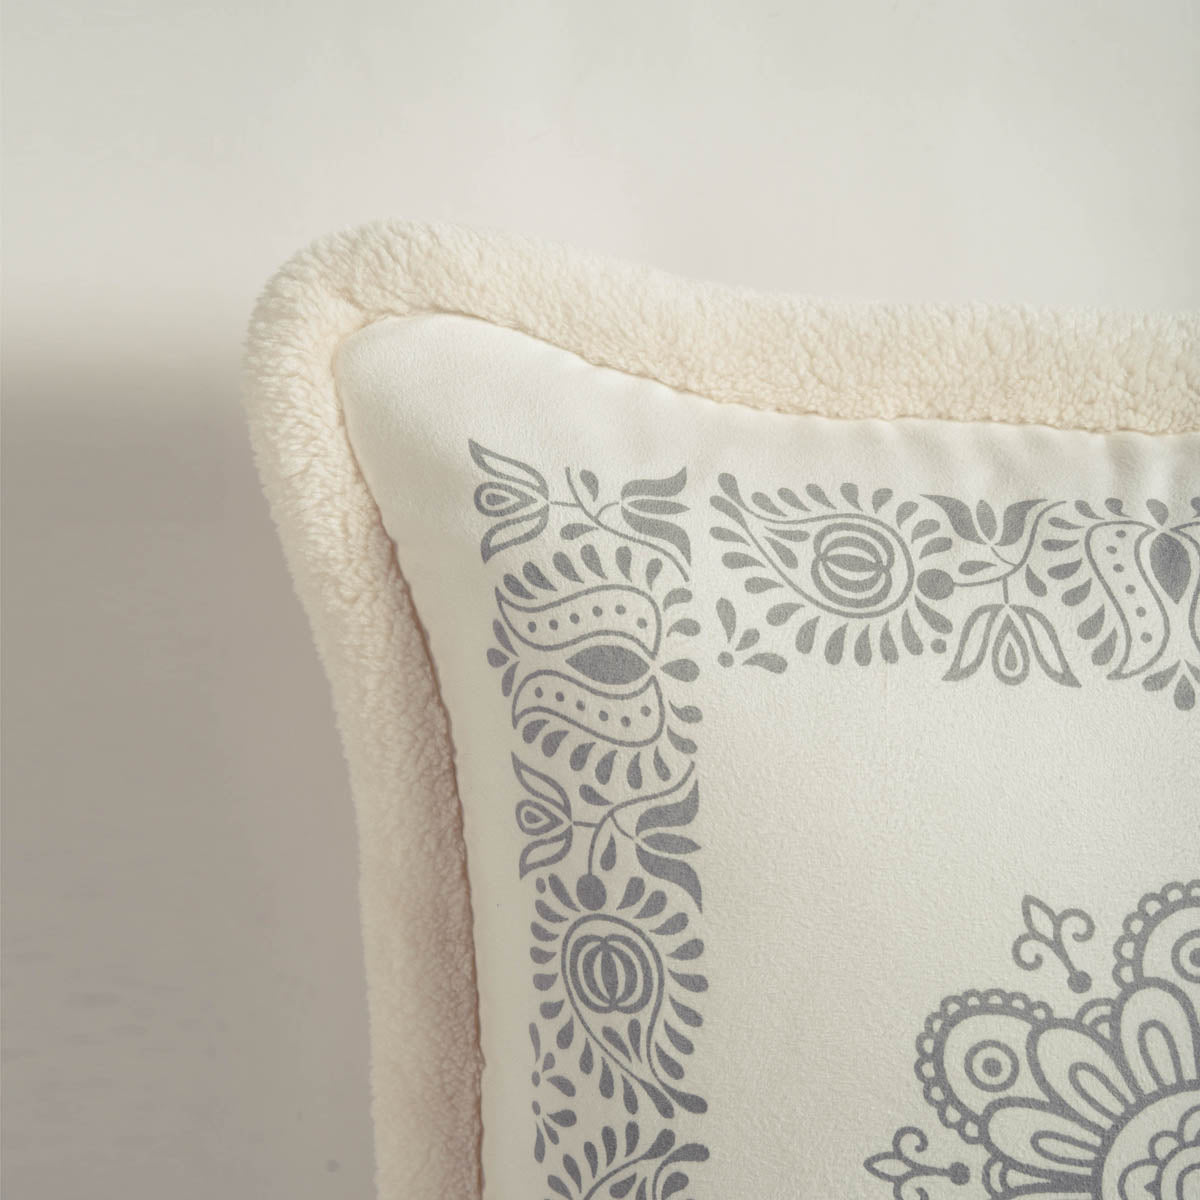 Svenska - off white printed pillow cover, nordic style cushion cover, Scandinavian